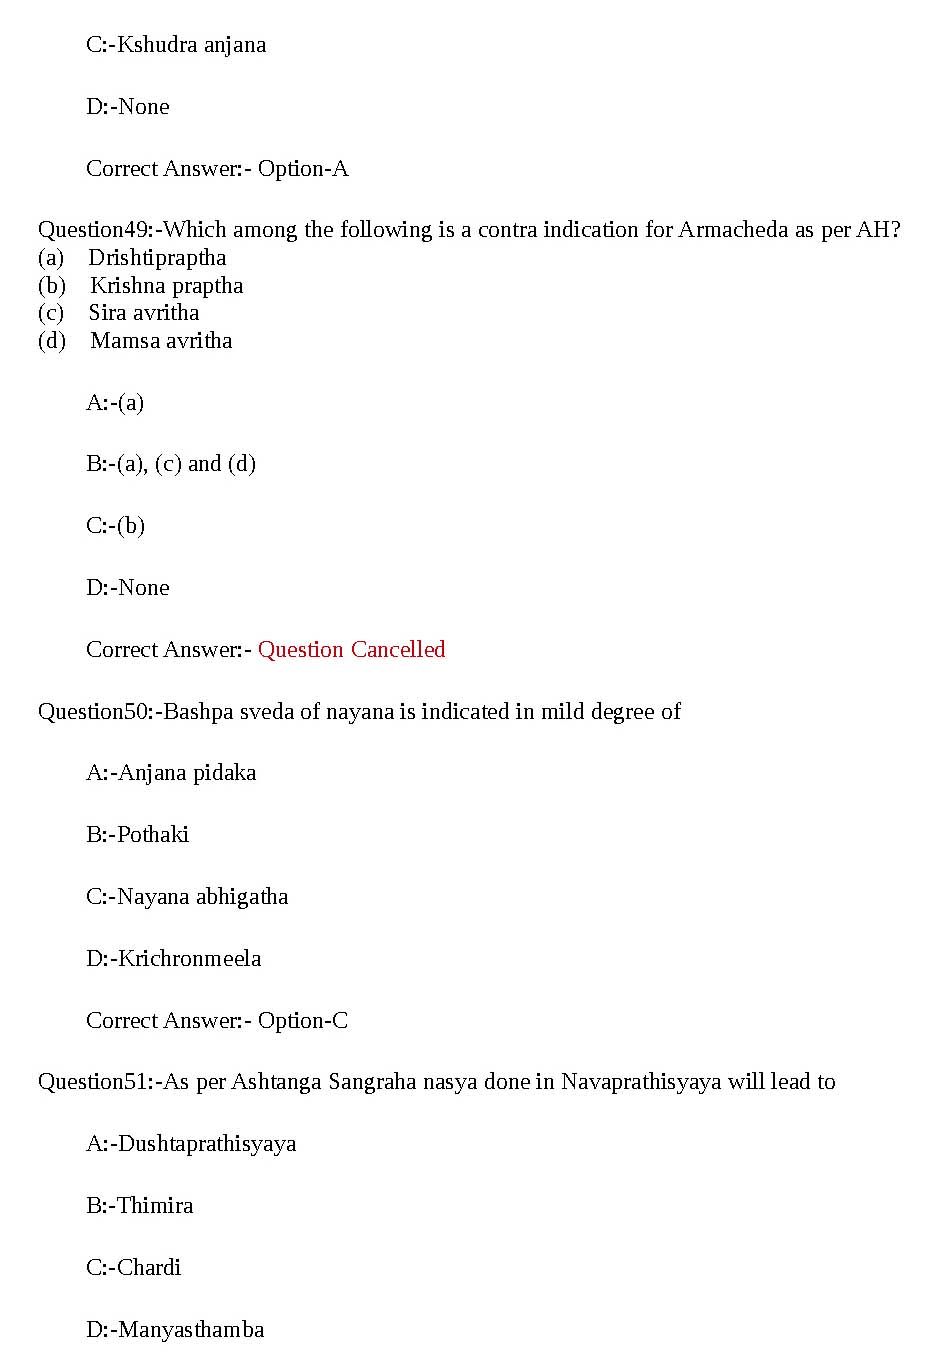 KPSC Medical Officer Netra Exam 2019 Code 422019OL 15